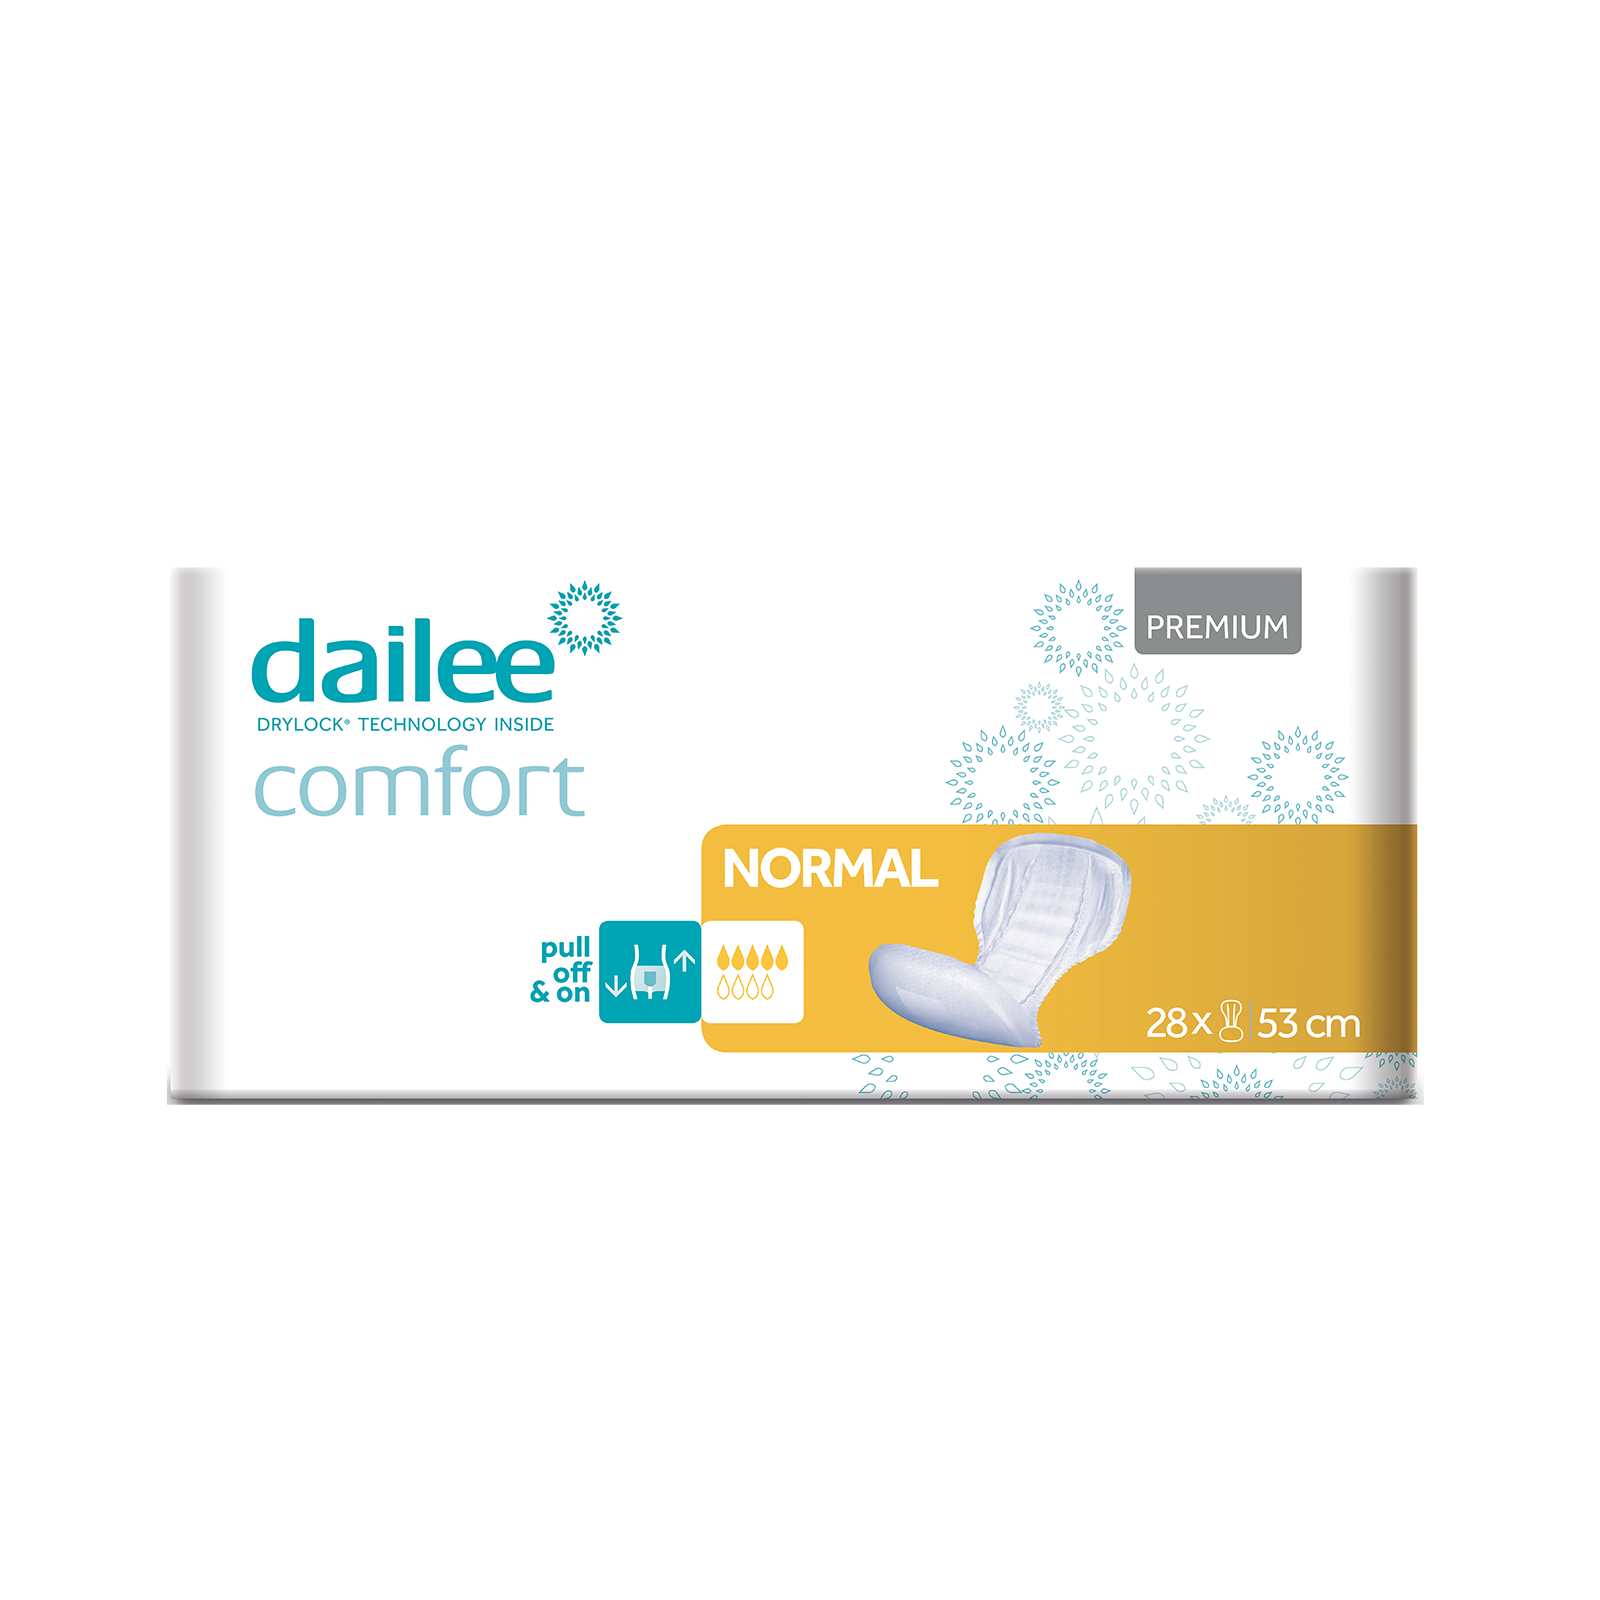 dailee_premium_comfort_normal_thumb